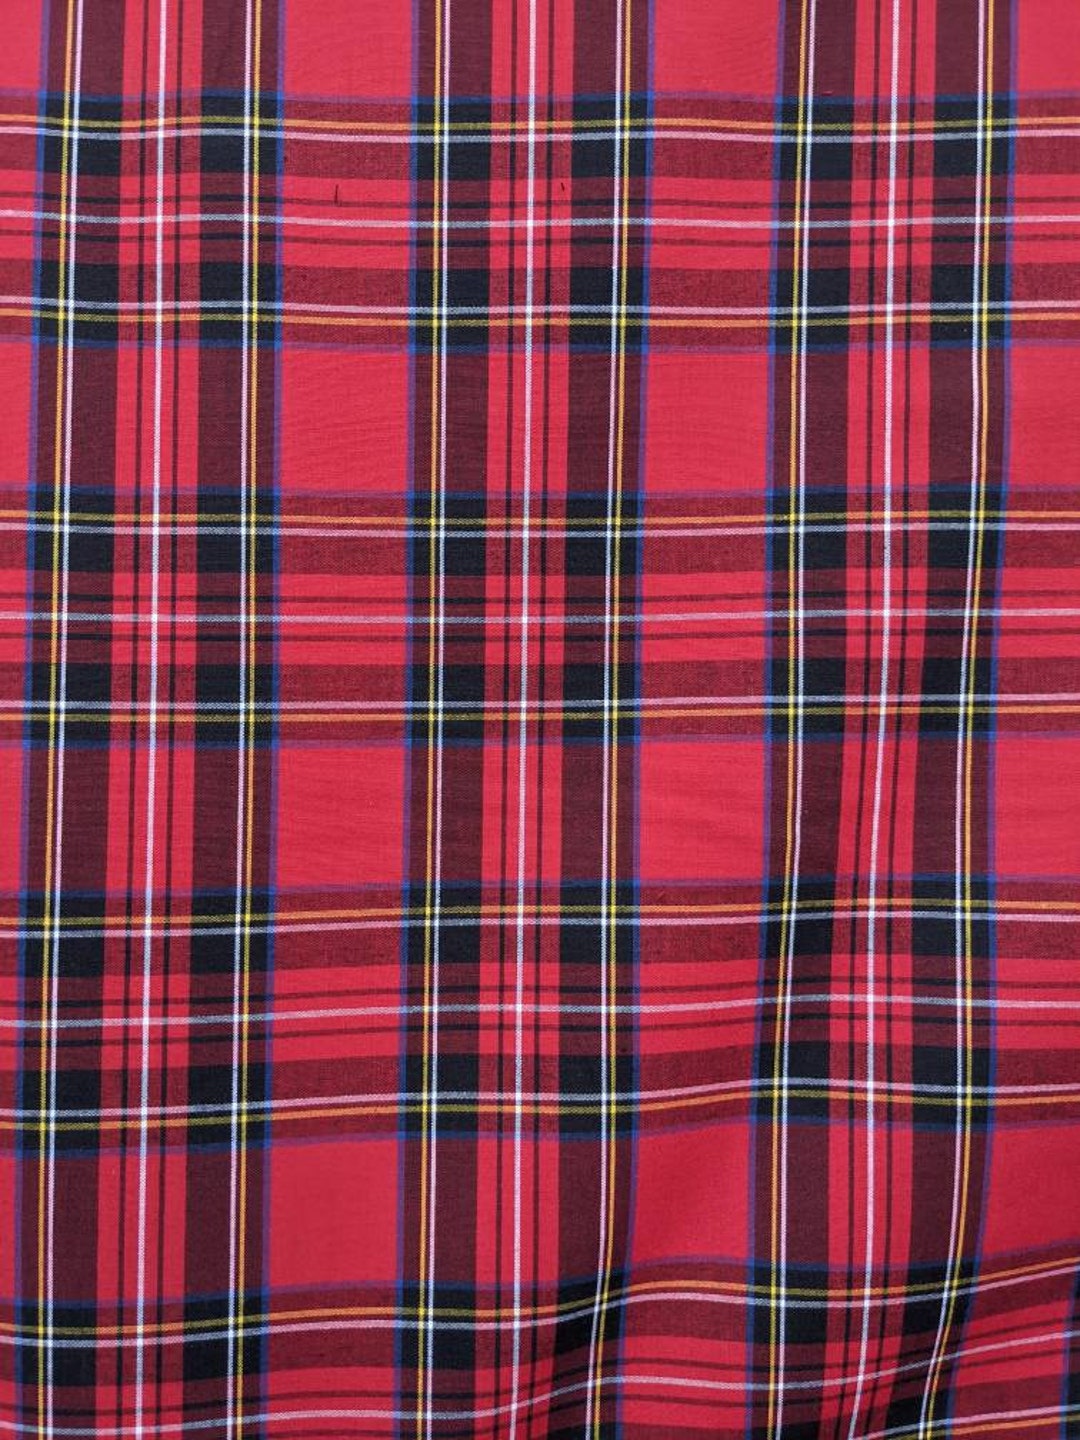 Red Royal Stewart 100% Cotton Tartan, Check Fabric Buy the Metre, Half  Metre or Fat Quarter -  Canada